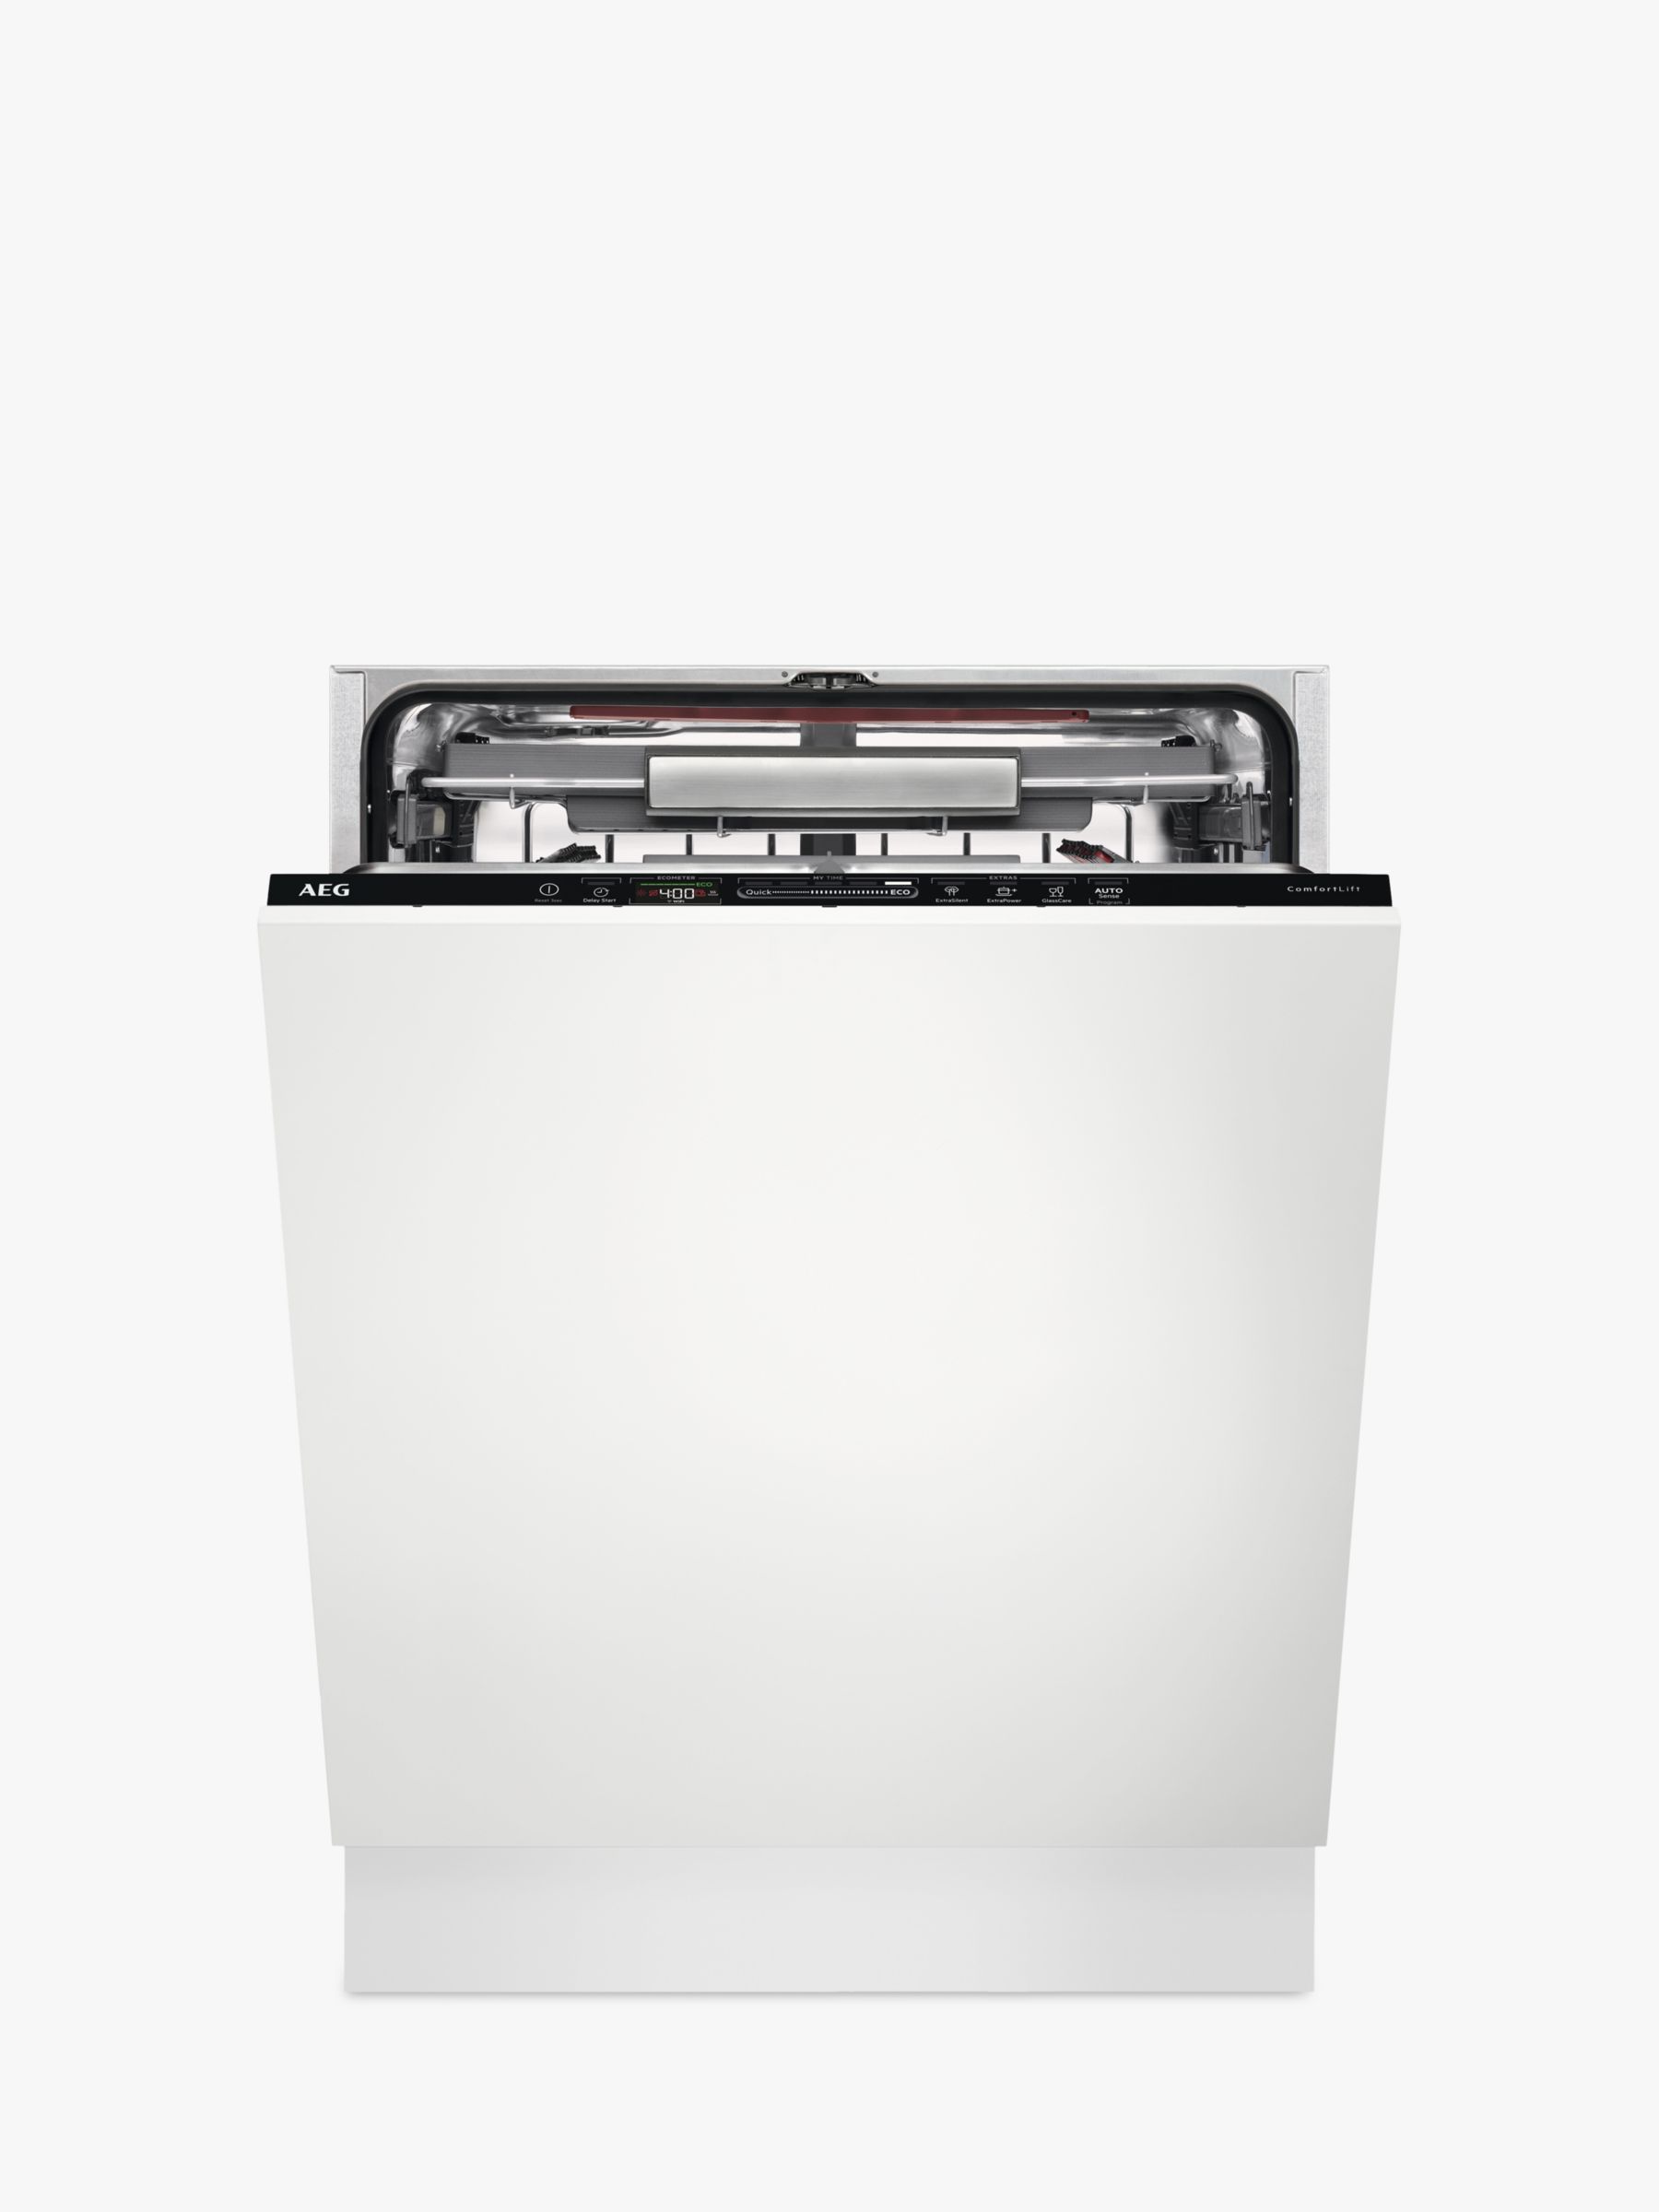 aeg fsk31600z dishwasher review